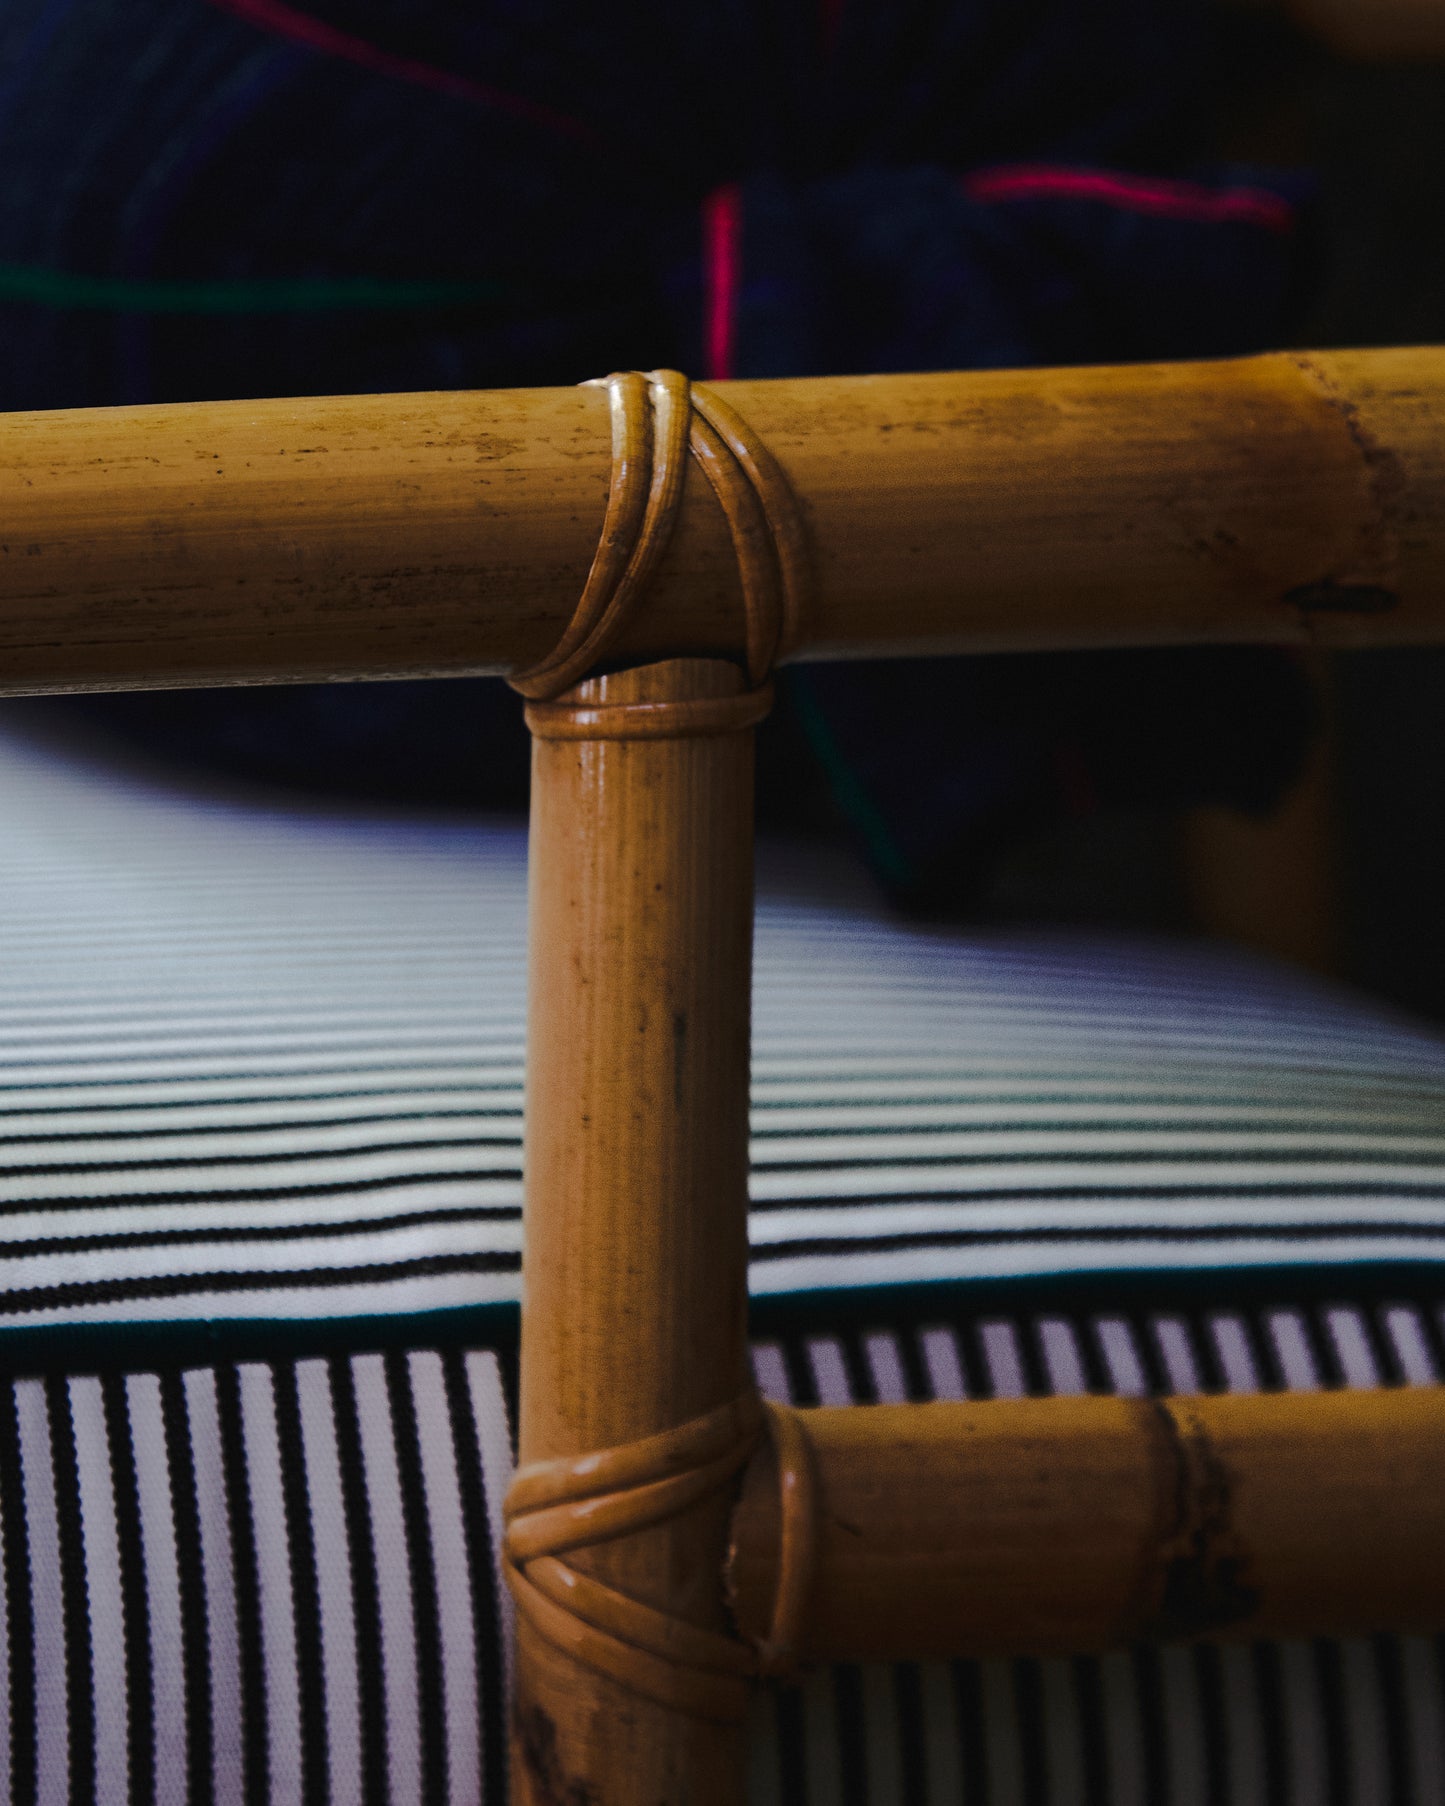 Bamboo sofa with striped mattress